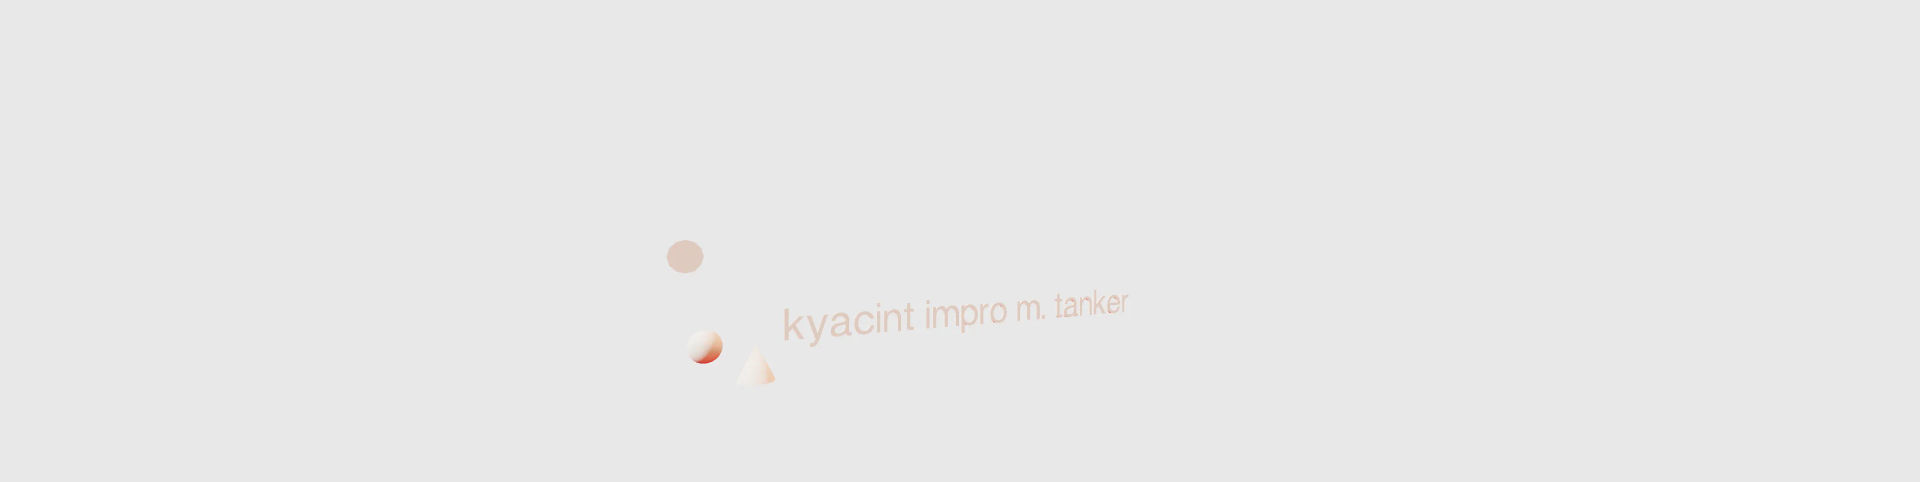 kyacint impro m tanker.fbx